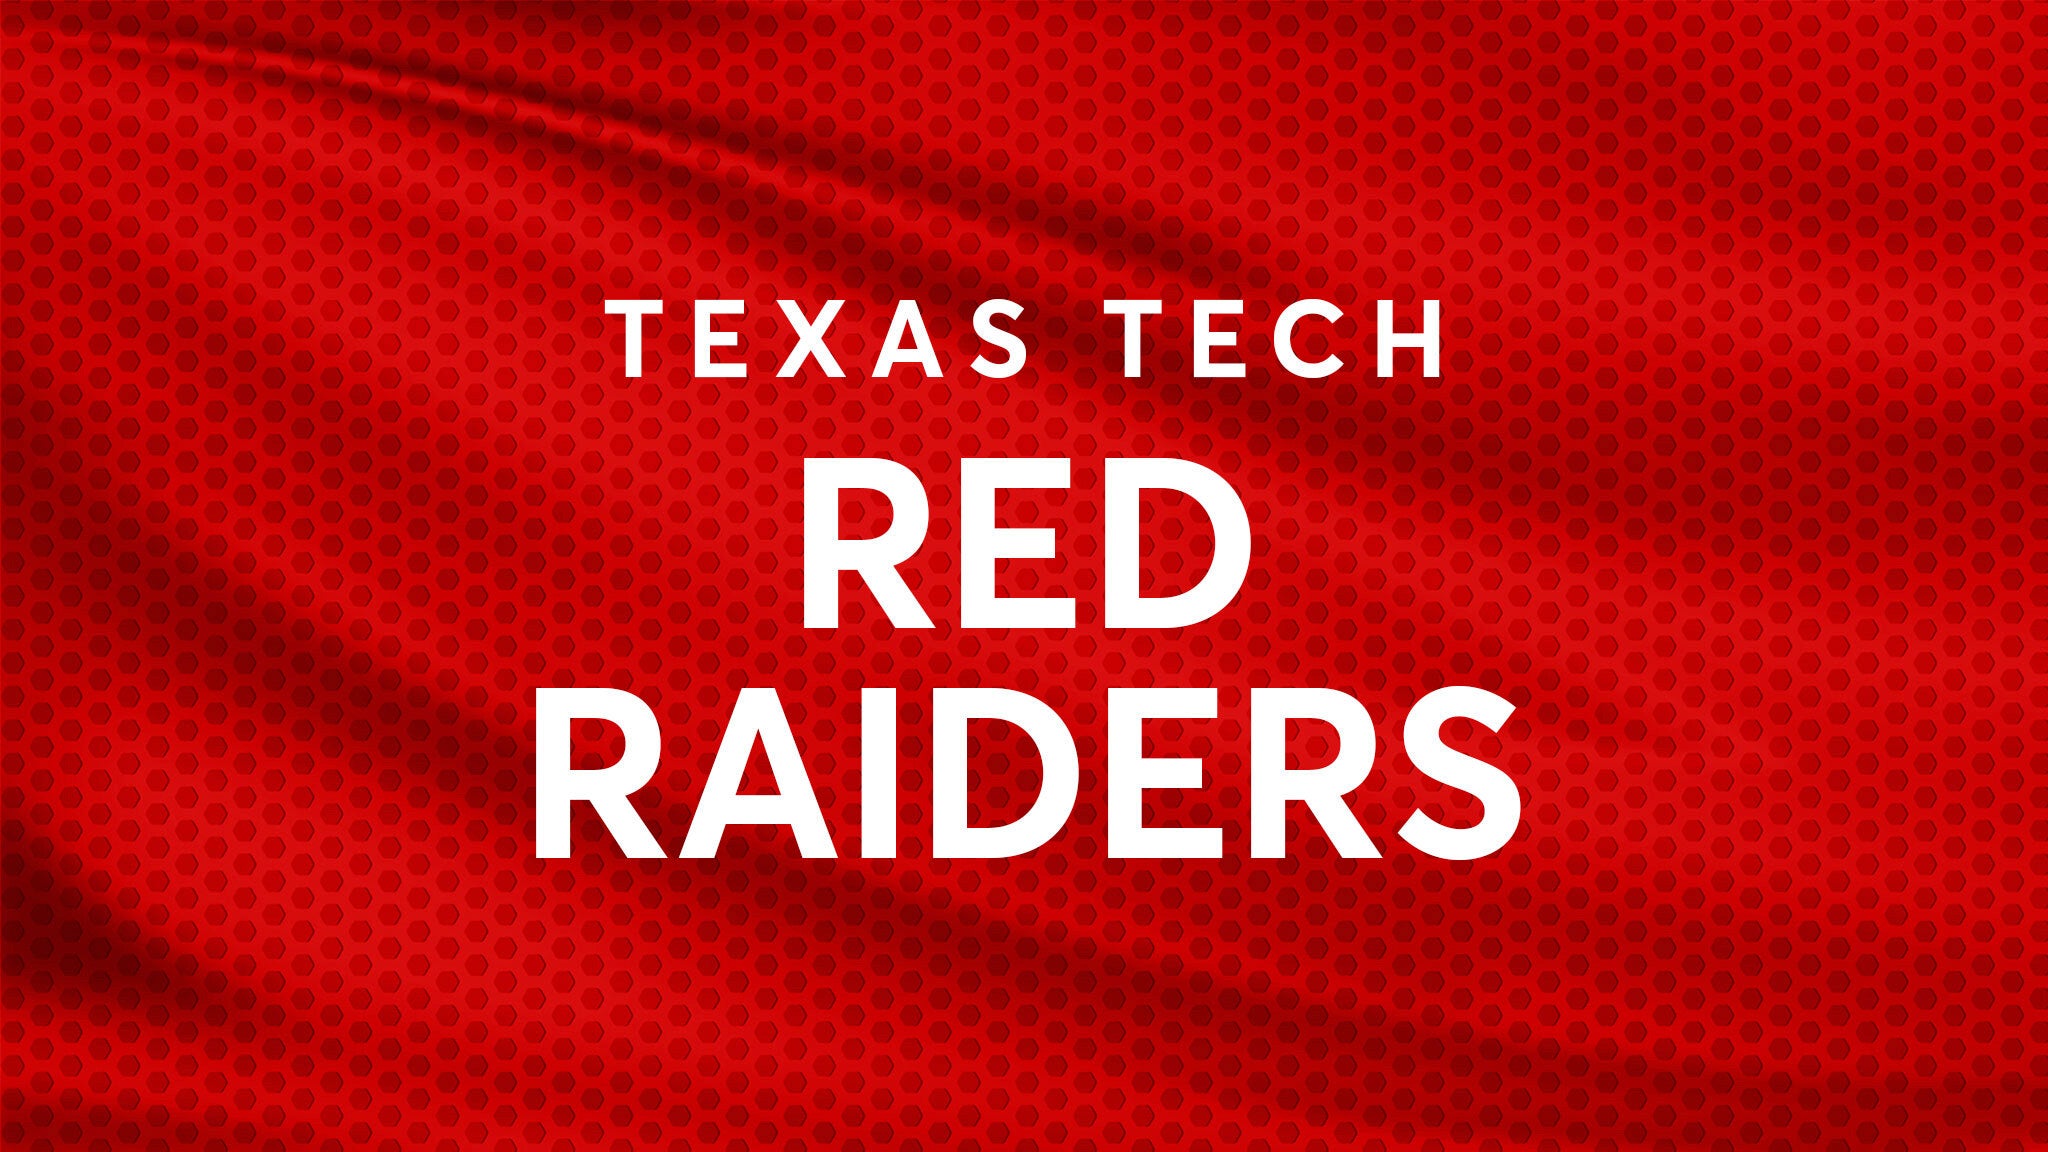 Texas Tech Red Raiders Football vs. Cincinnati Bearcats Football hero